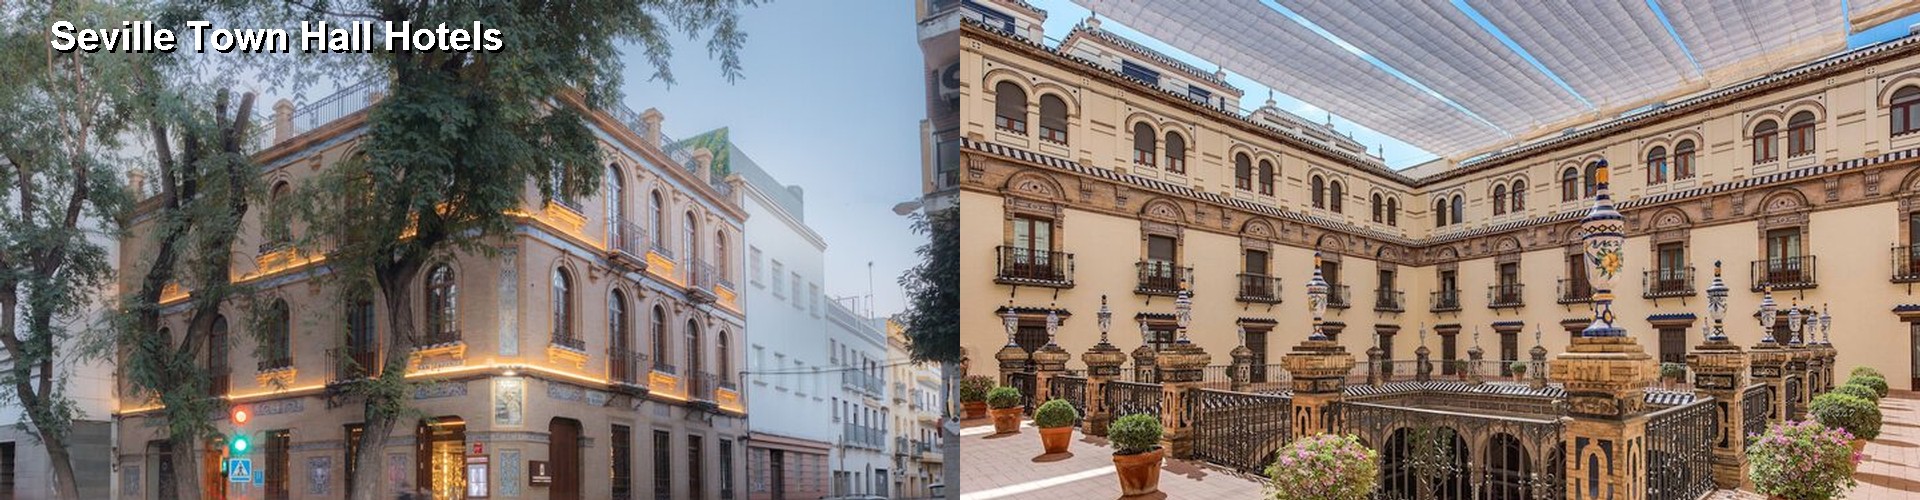 5 Best Hotels near Seville Town Hall